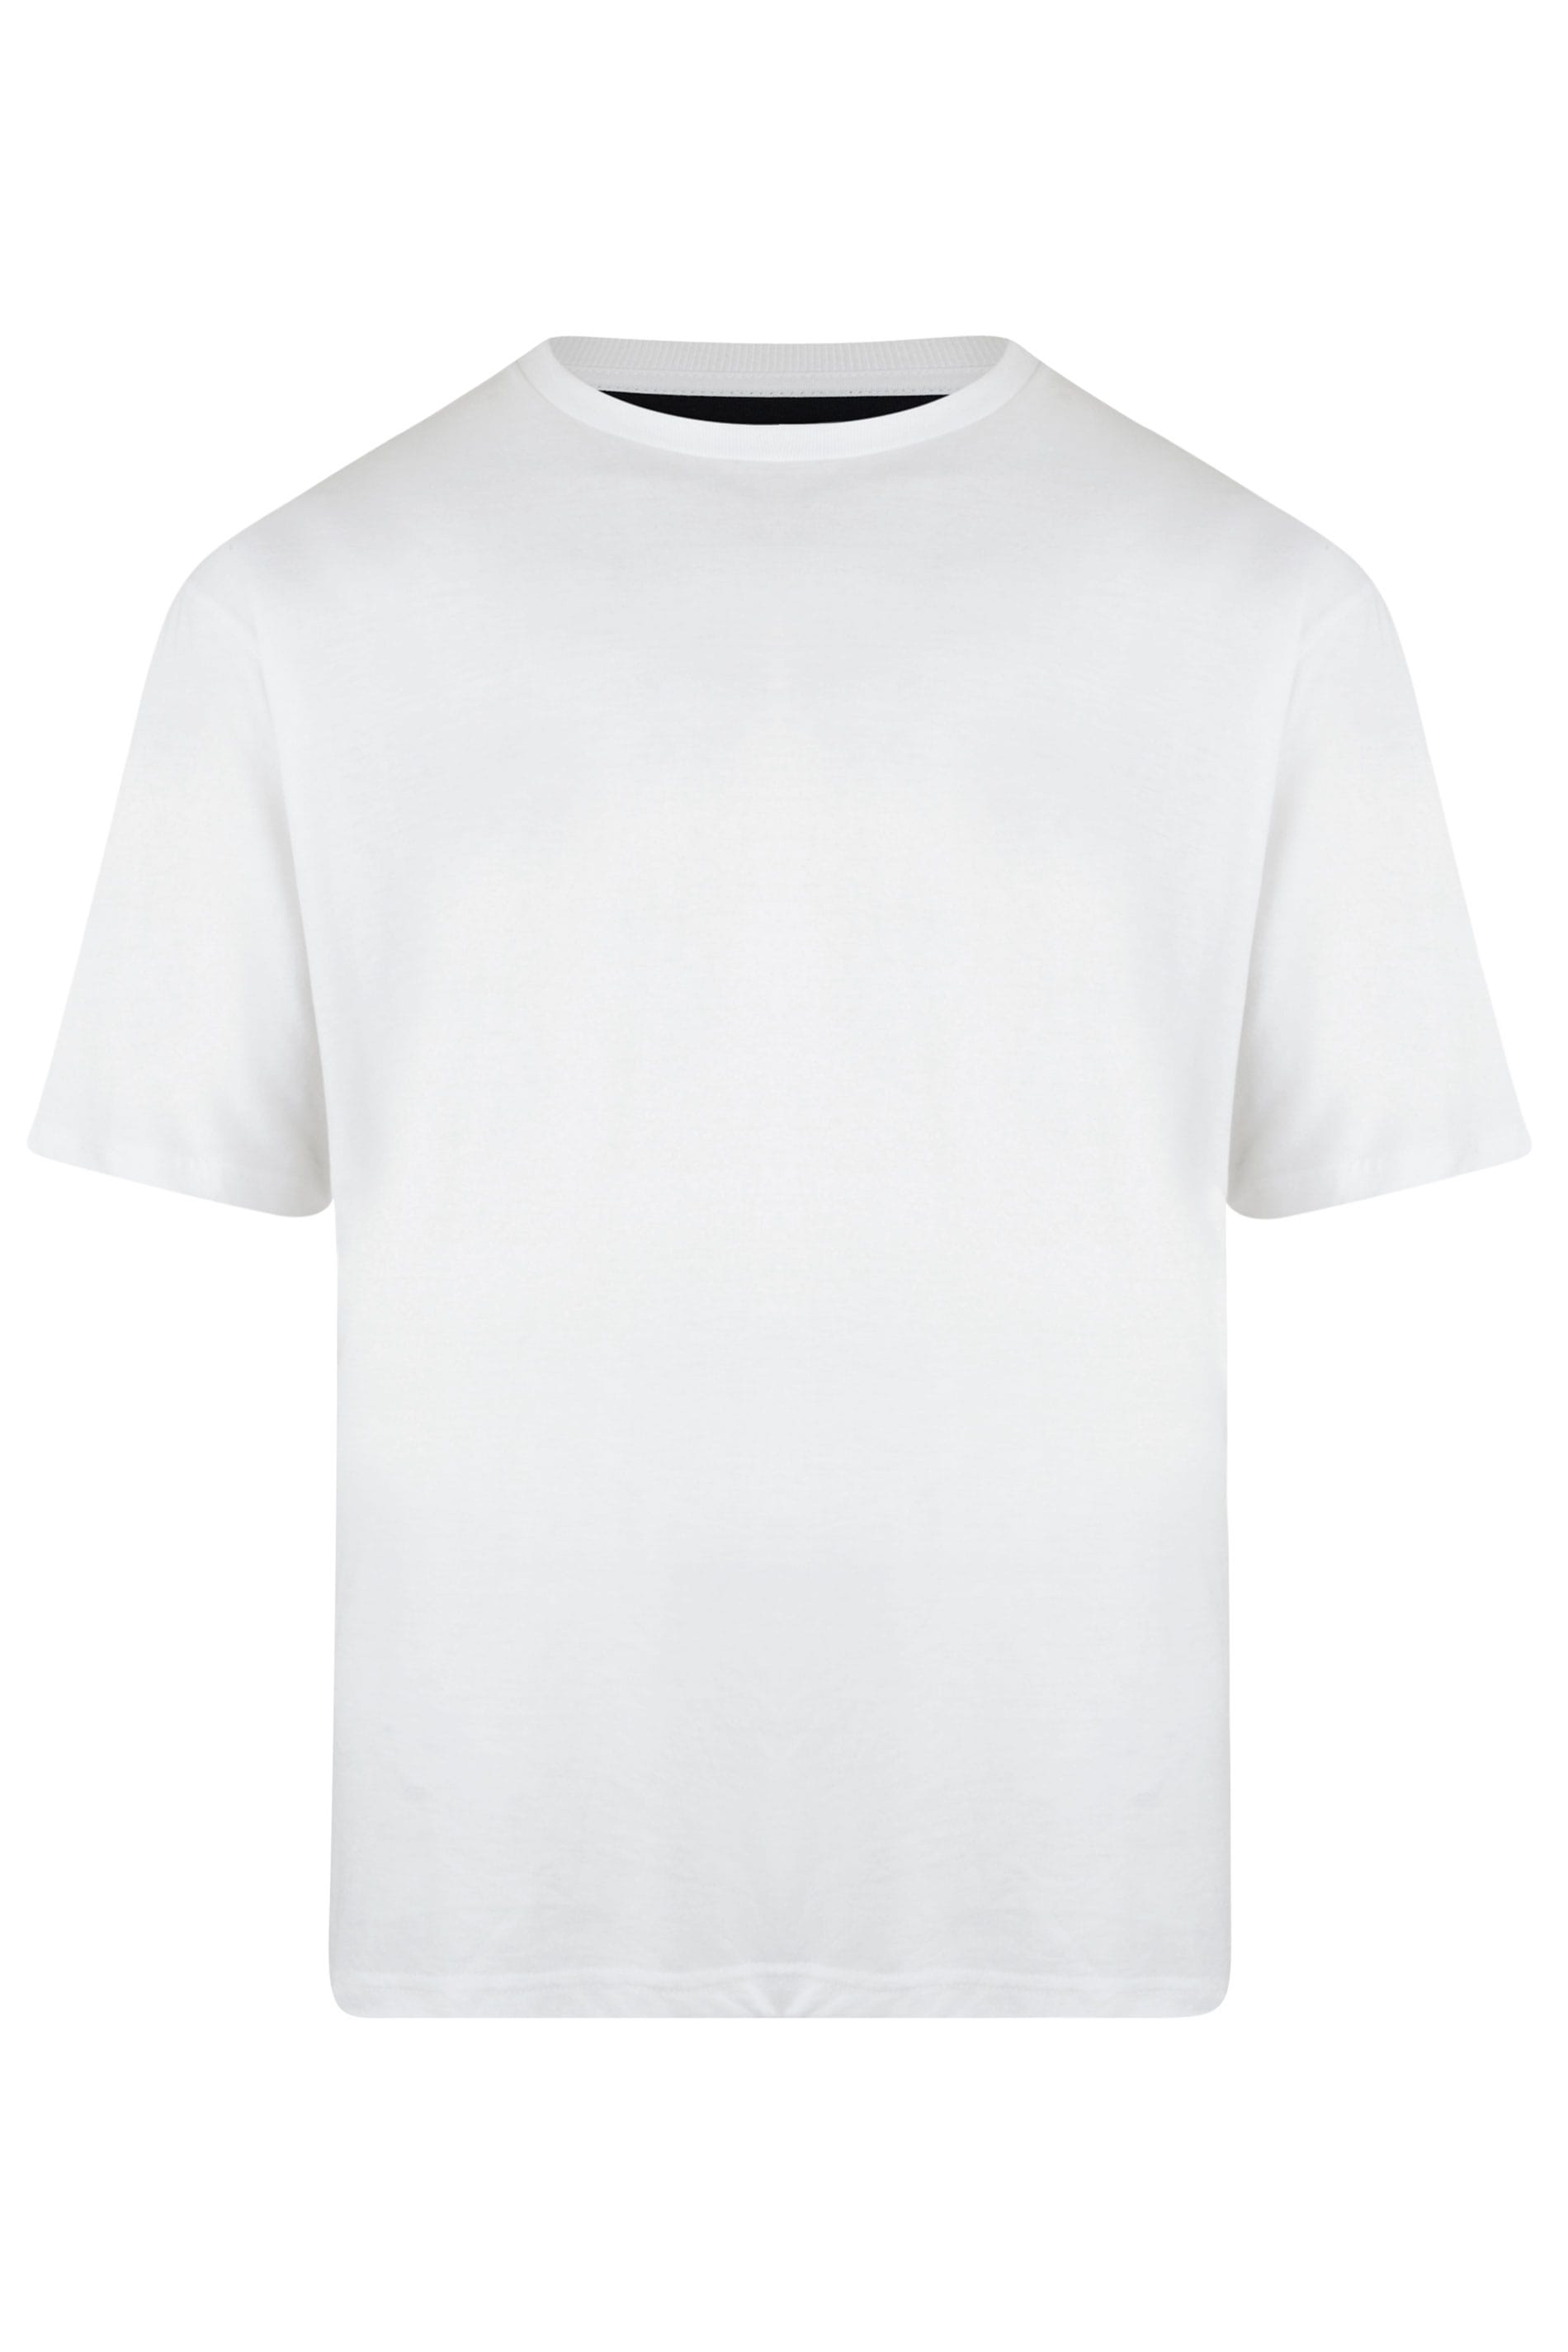 KAM Big & Tall White Plain T-Shirt | BadRhino